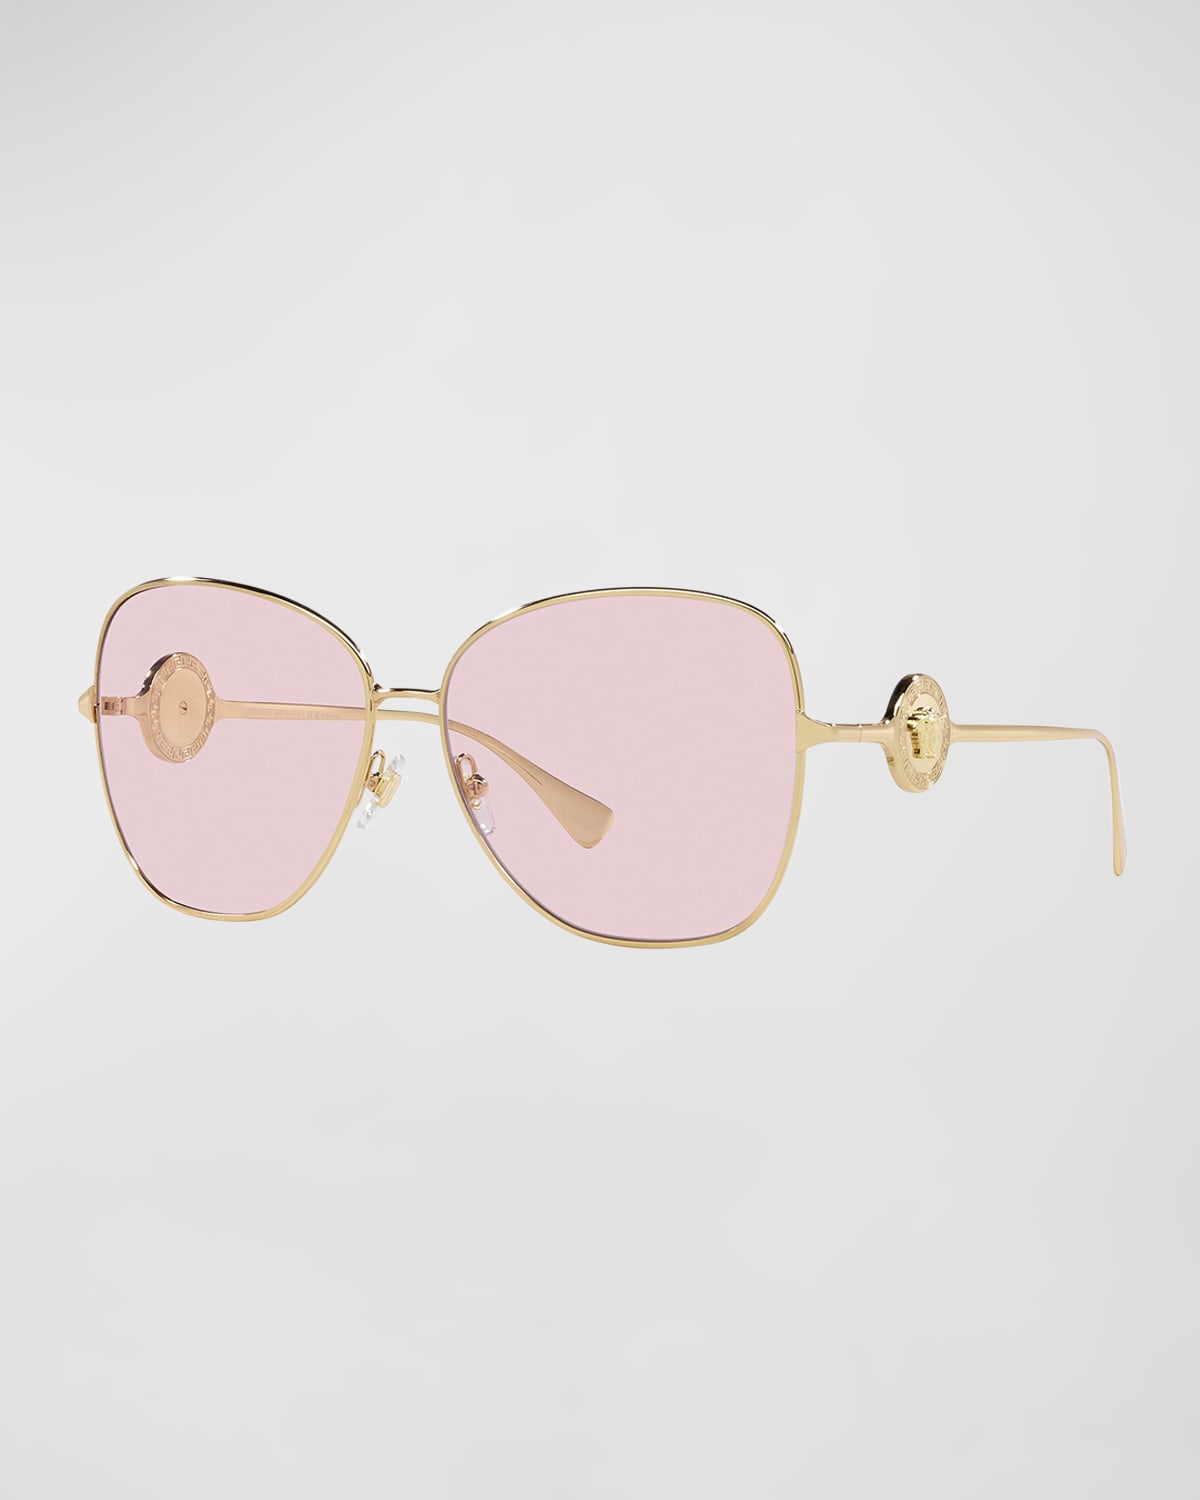 Versace Medusa Steel And Plastic Butterfly Sunglasses Neiman Marcus 